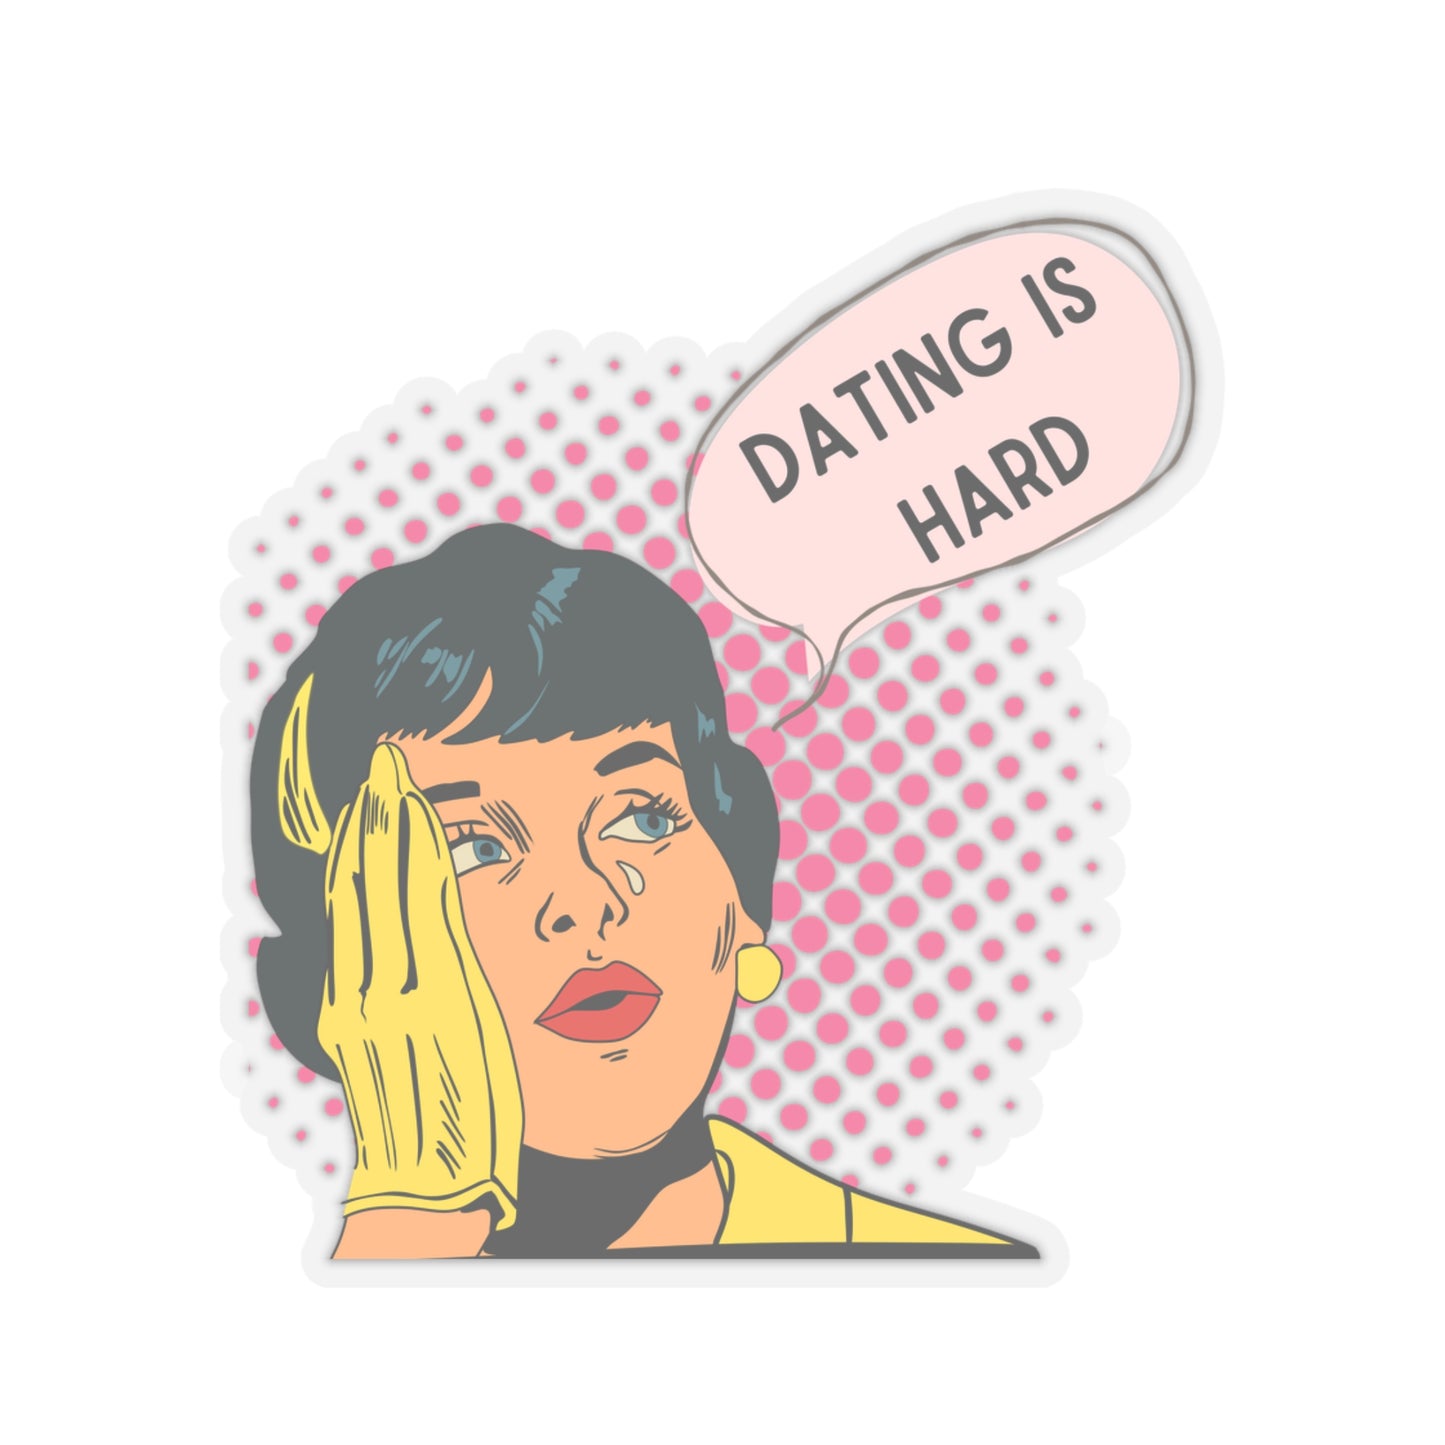 Dating is Hard Sticker